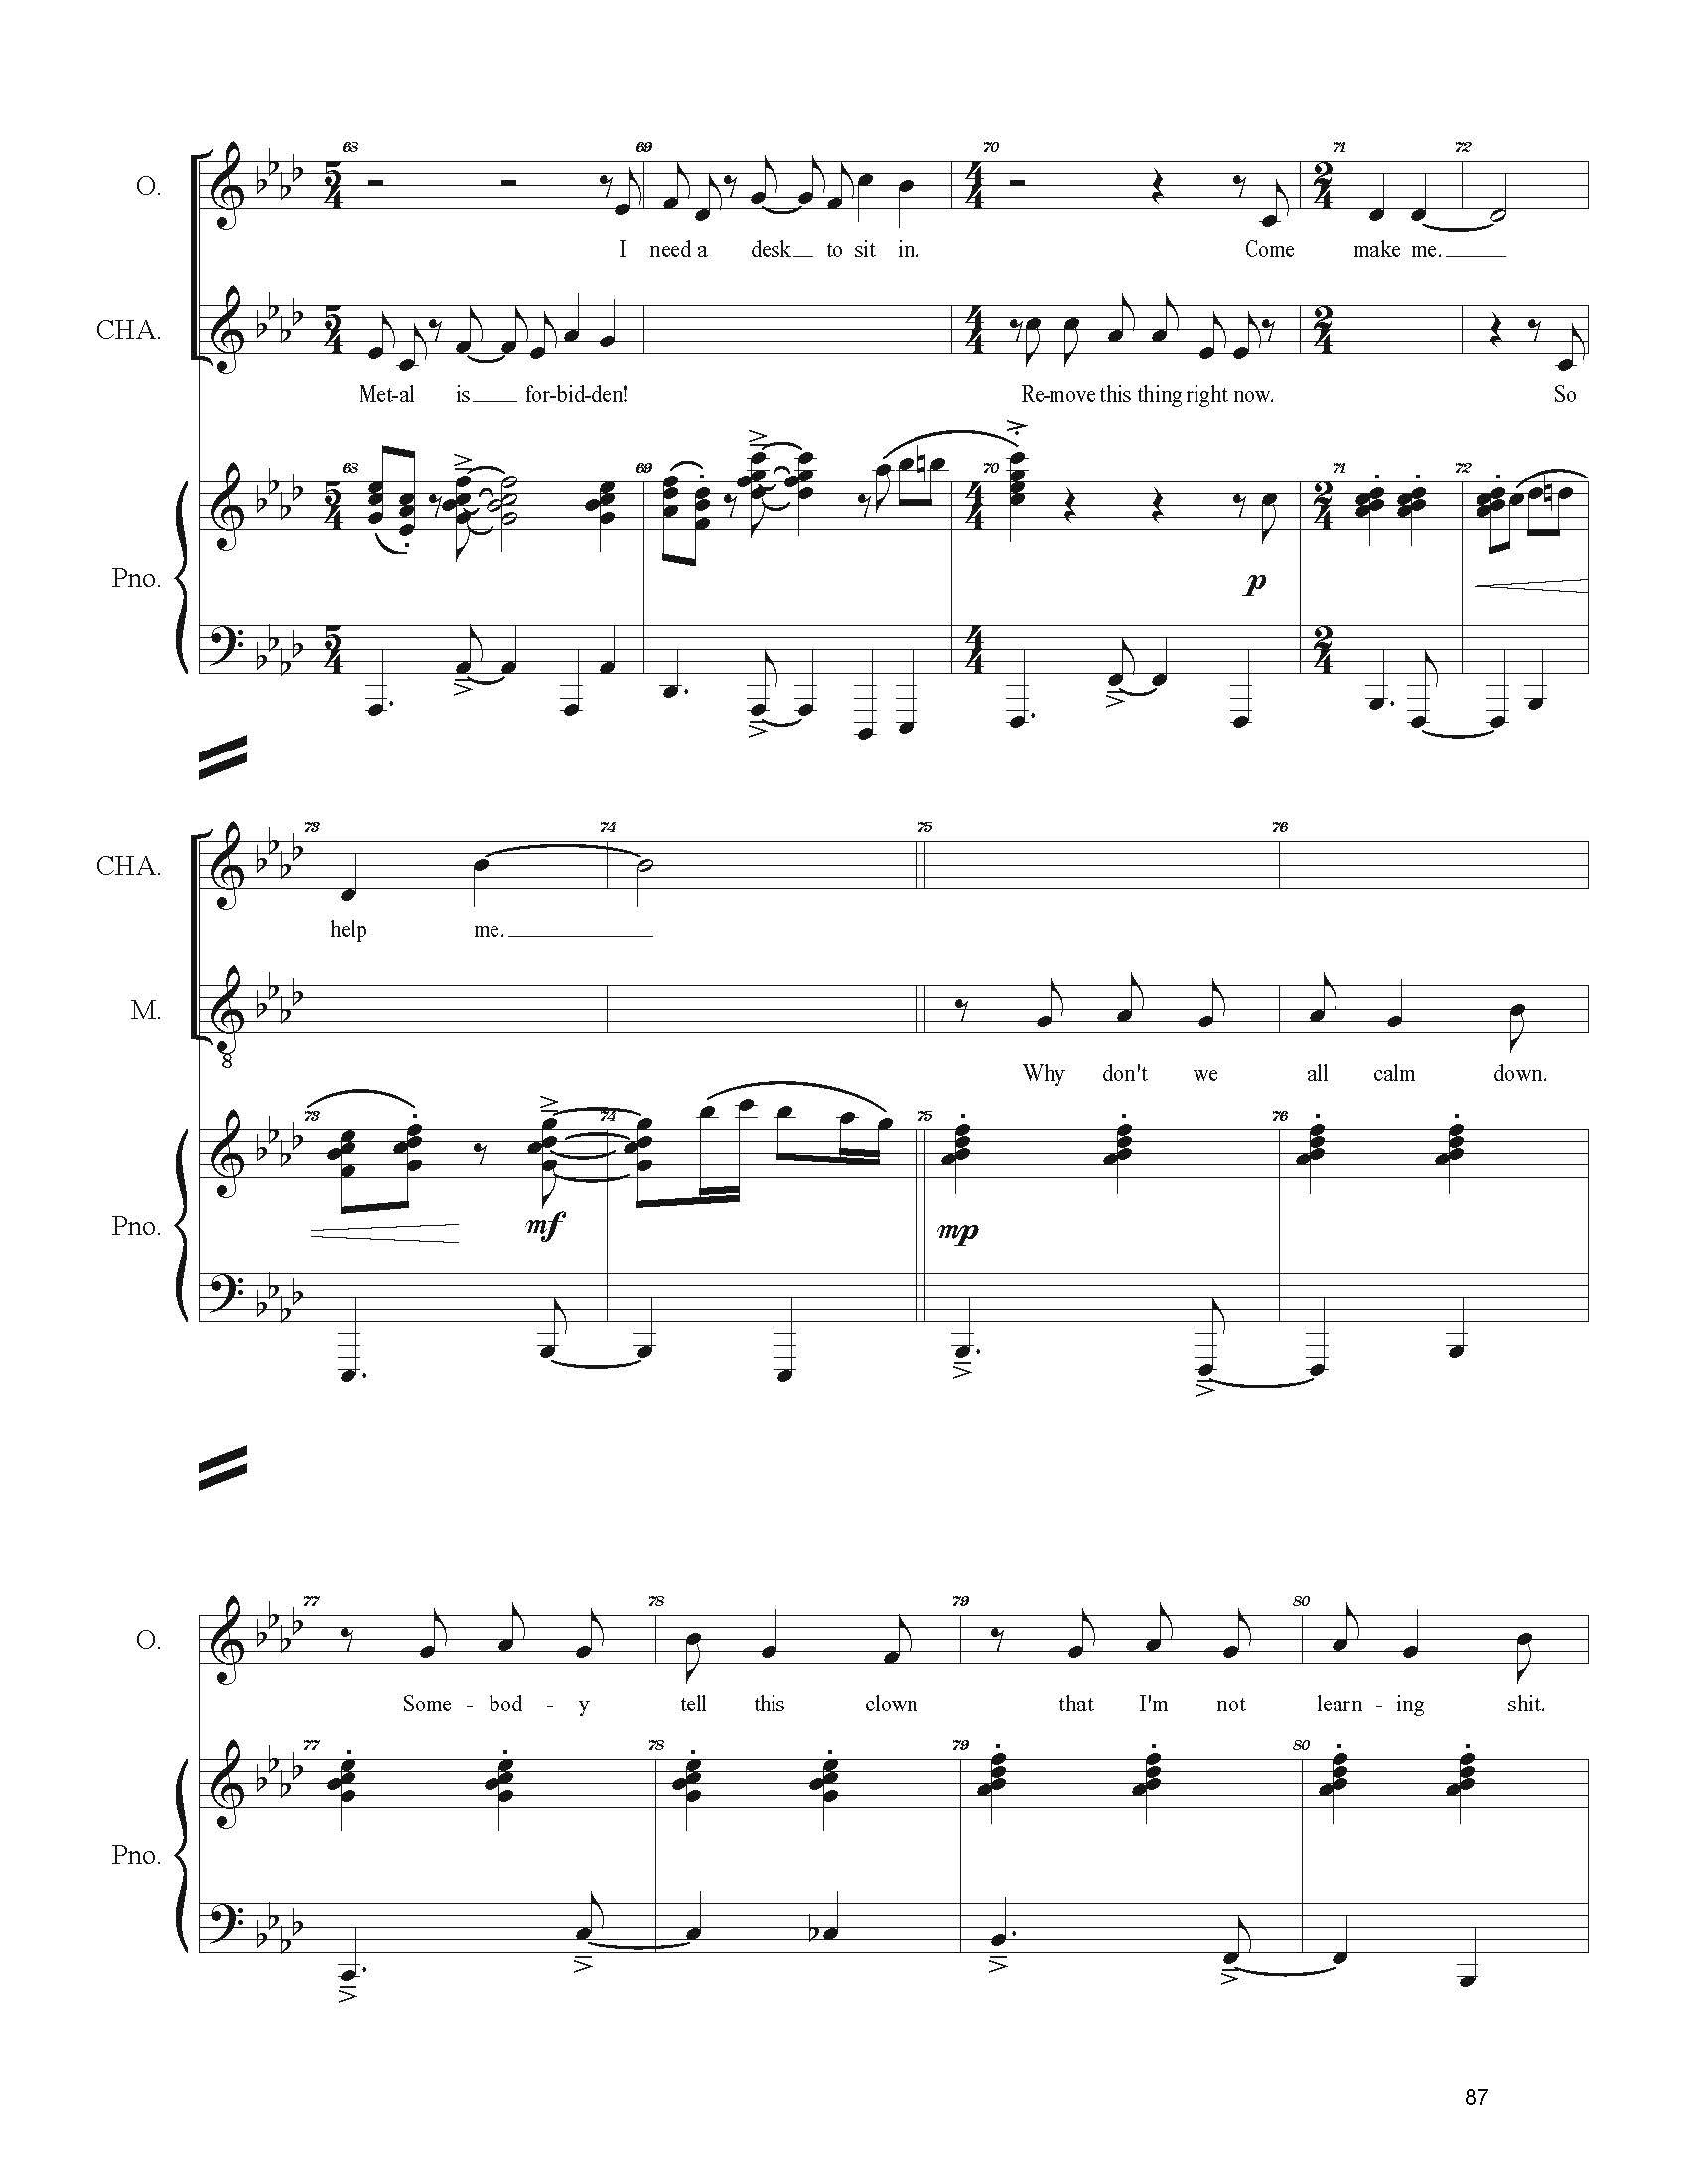 FULL PIANO VOCAL SCORE DRAFT 1 - Score_Page_087.jpg